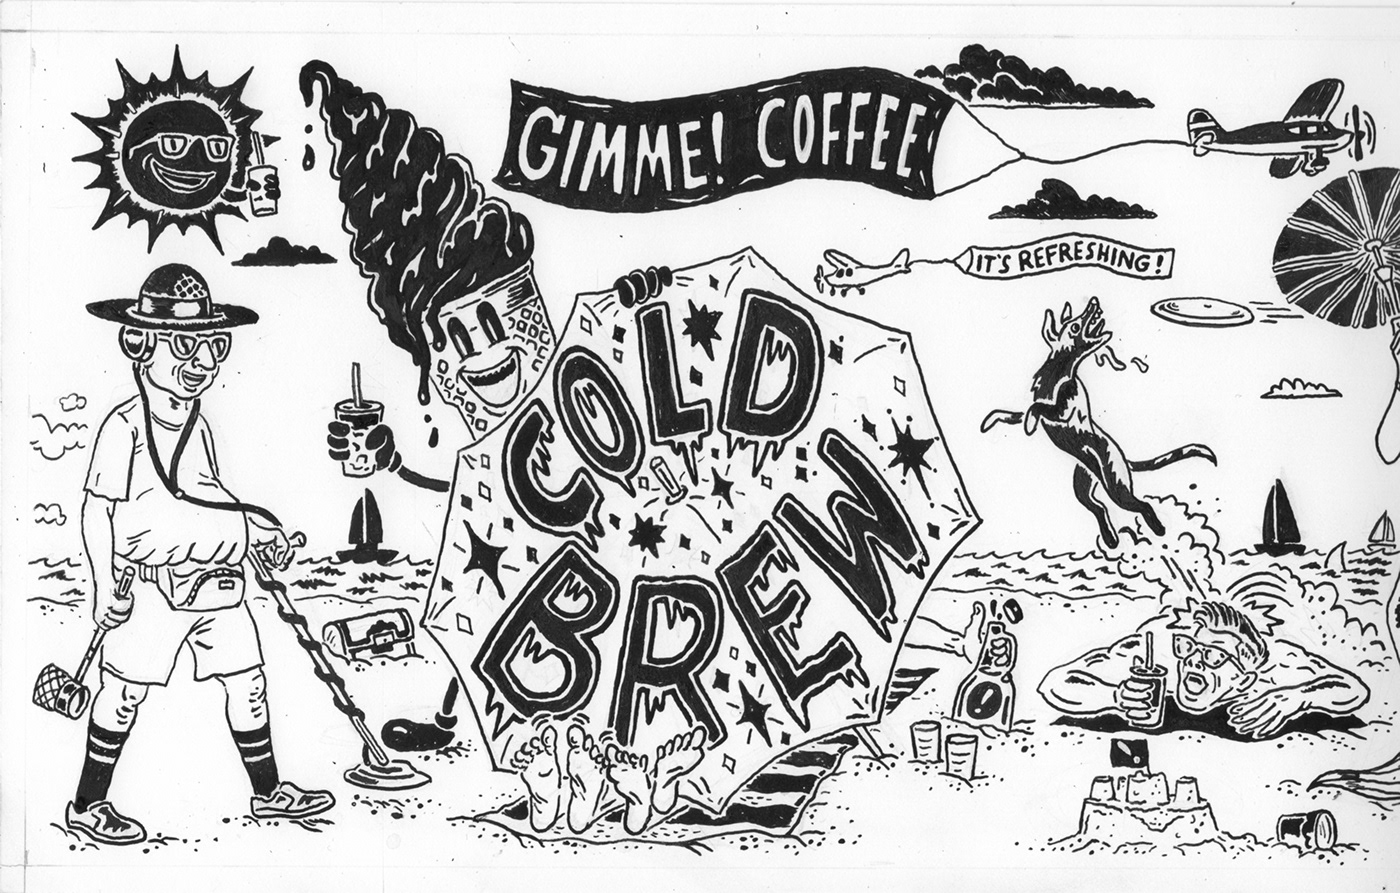 Coffee cold brew growler merchandise growler coney island beach new york city Brooklyn black and white